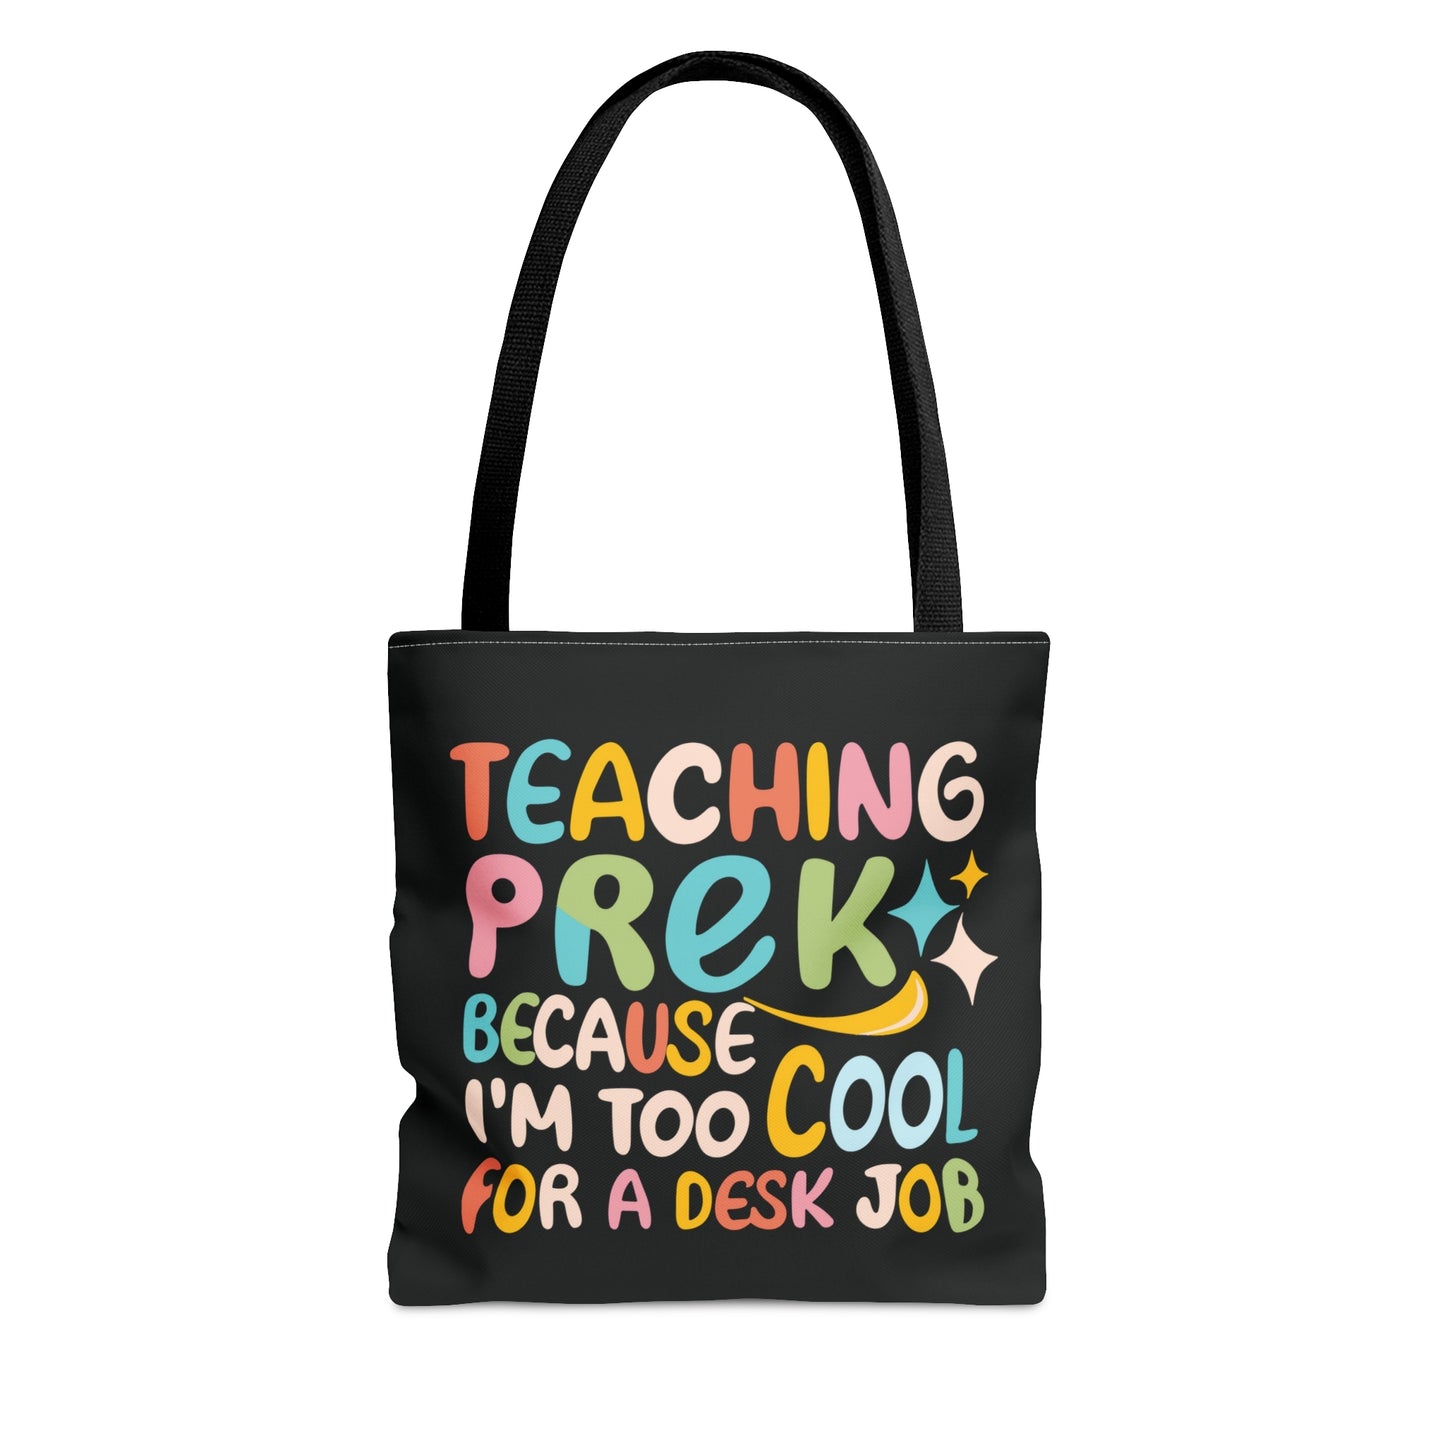 PreK Teacher Tote Bag -"Teaching PreK Because I'm Too Cool For a Desk Job"